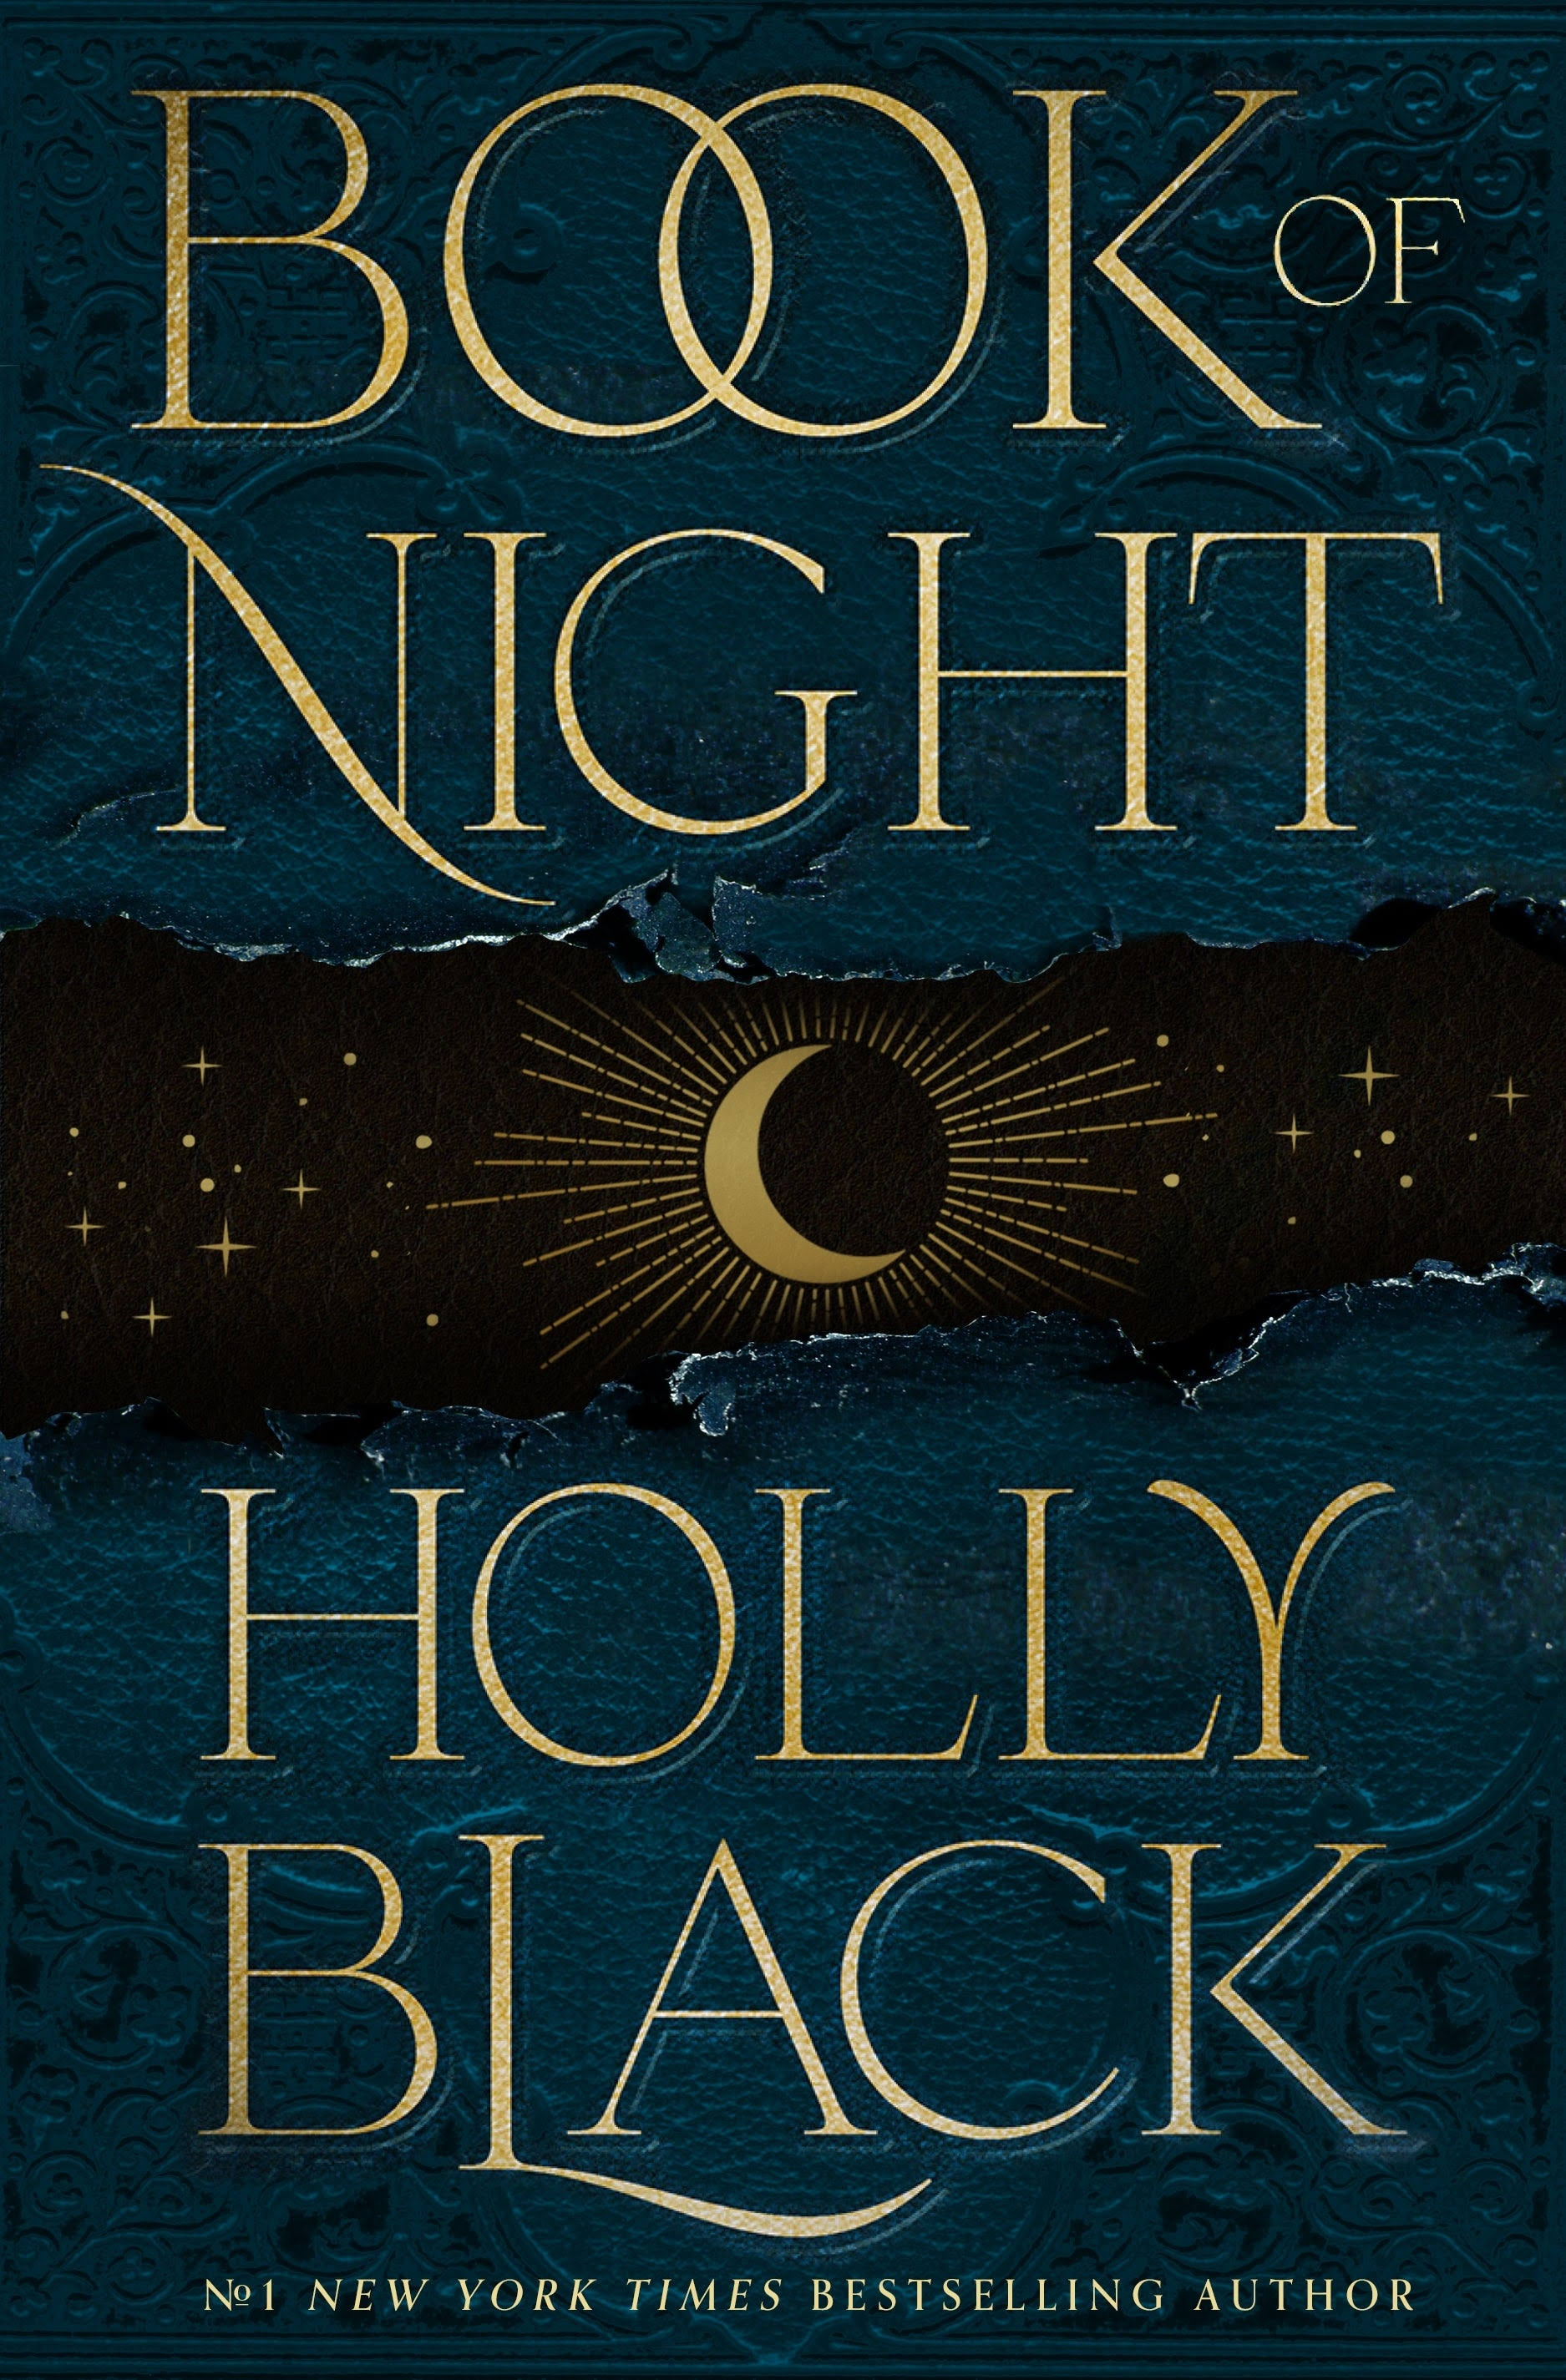 BOOK OF NIGHT Holly Black